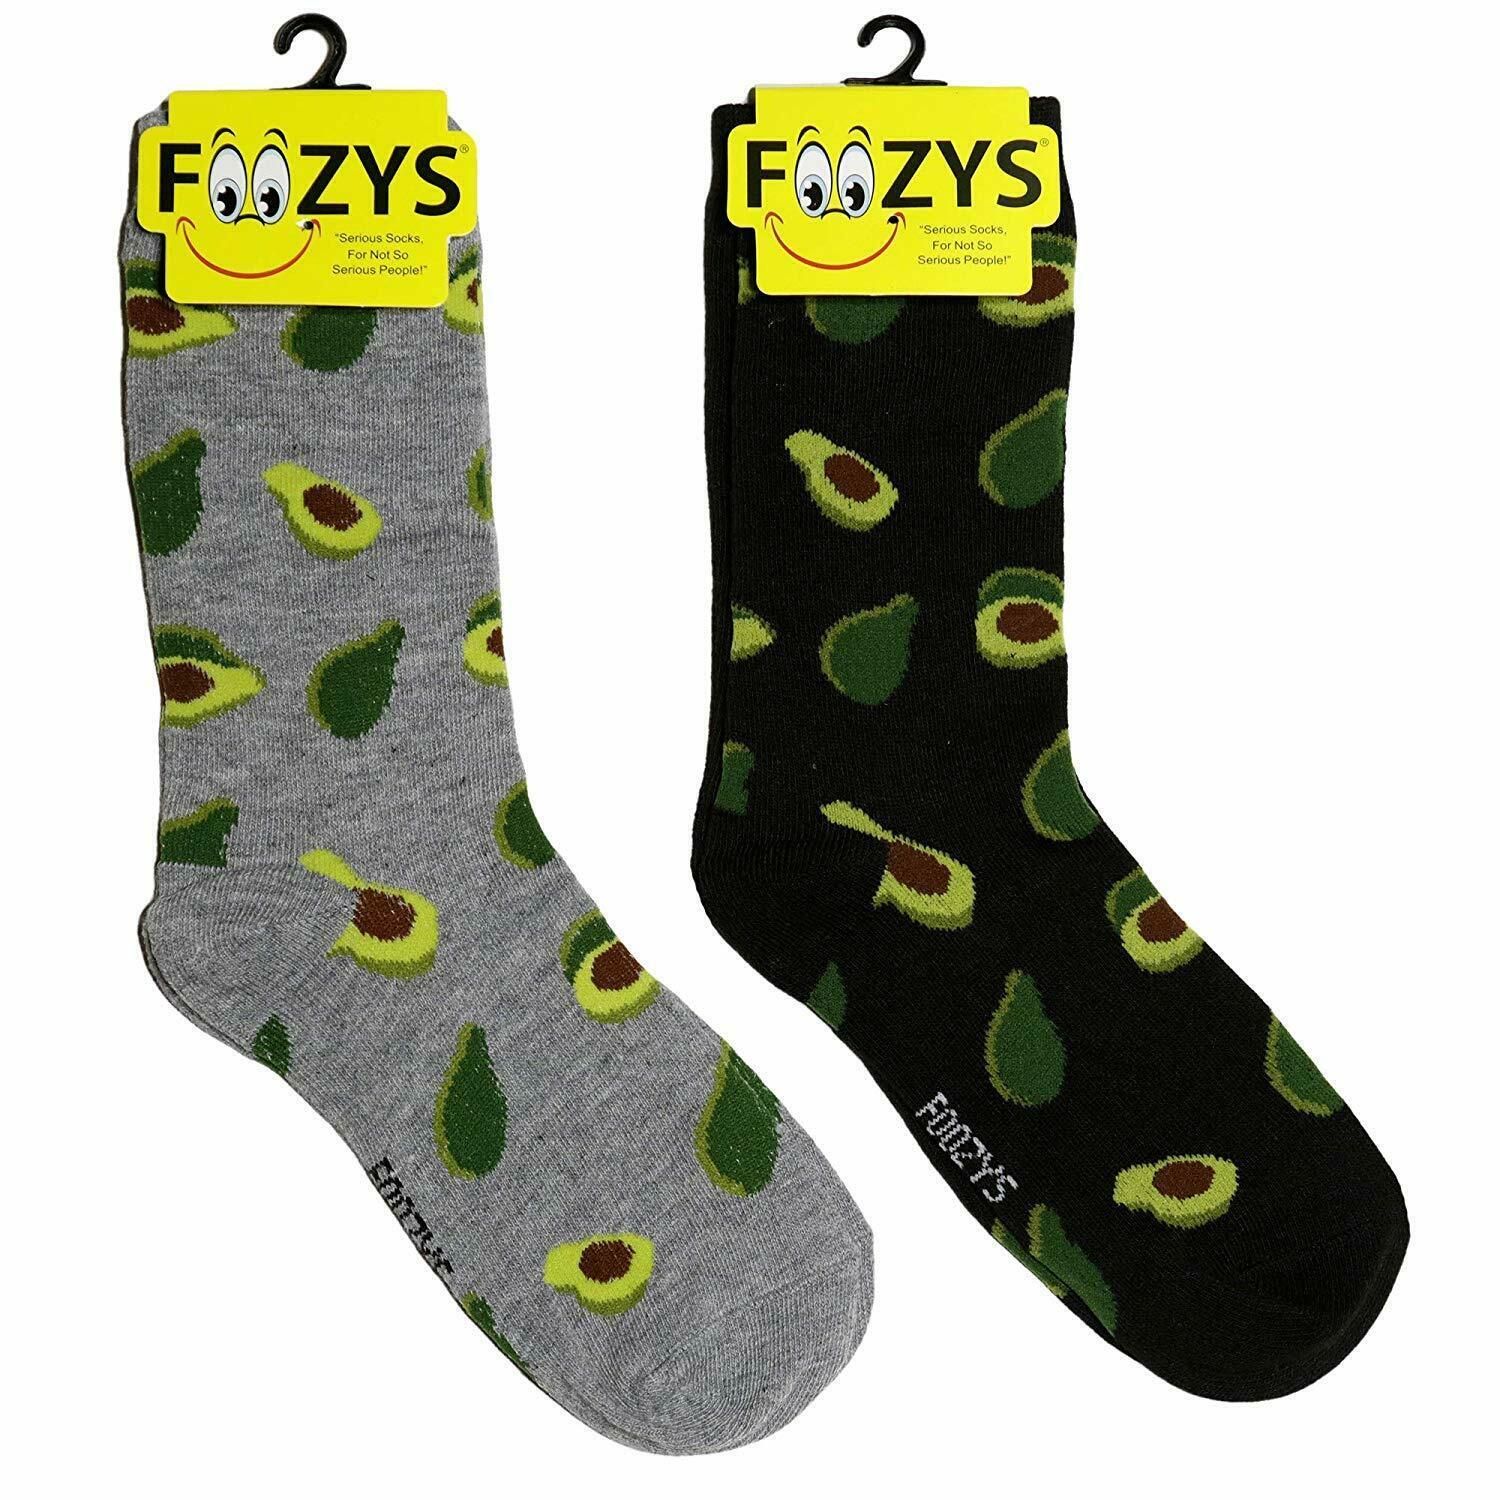 Avocado Healthy Fruit Guacamole Fun Novelty Crew Socks Foozys Women's 2 Pair